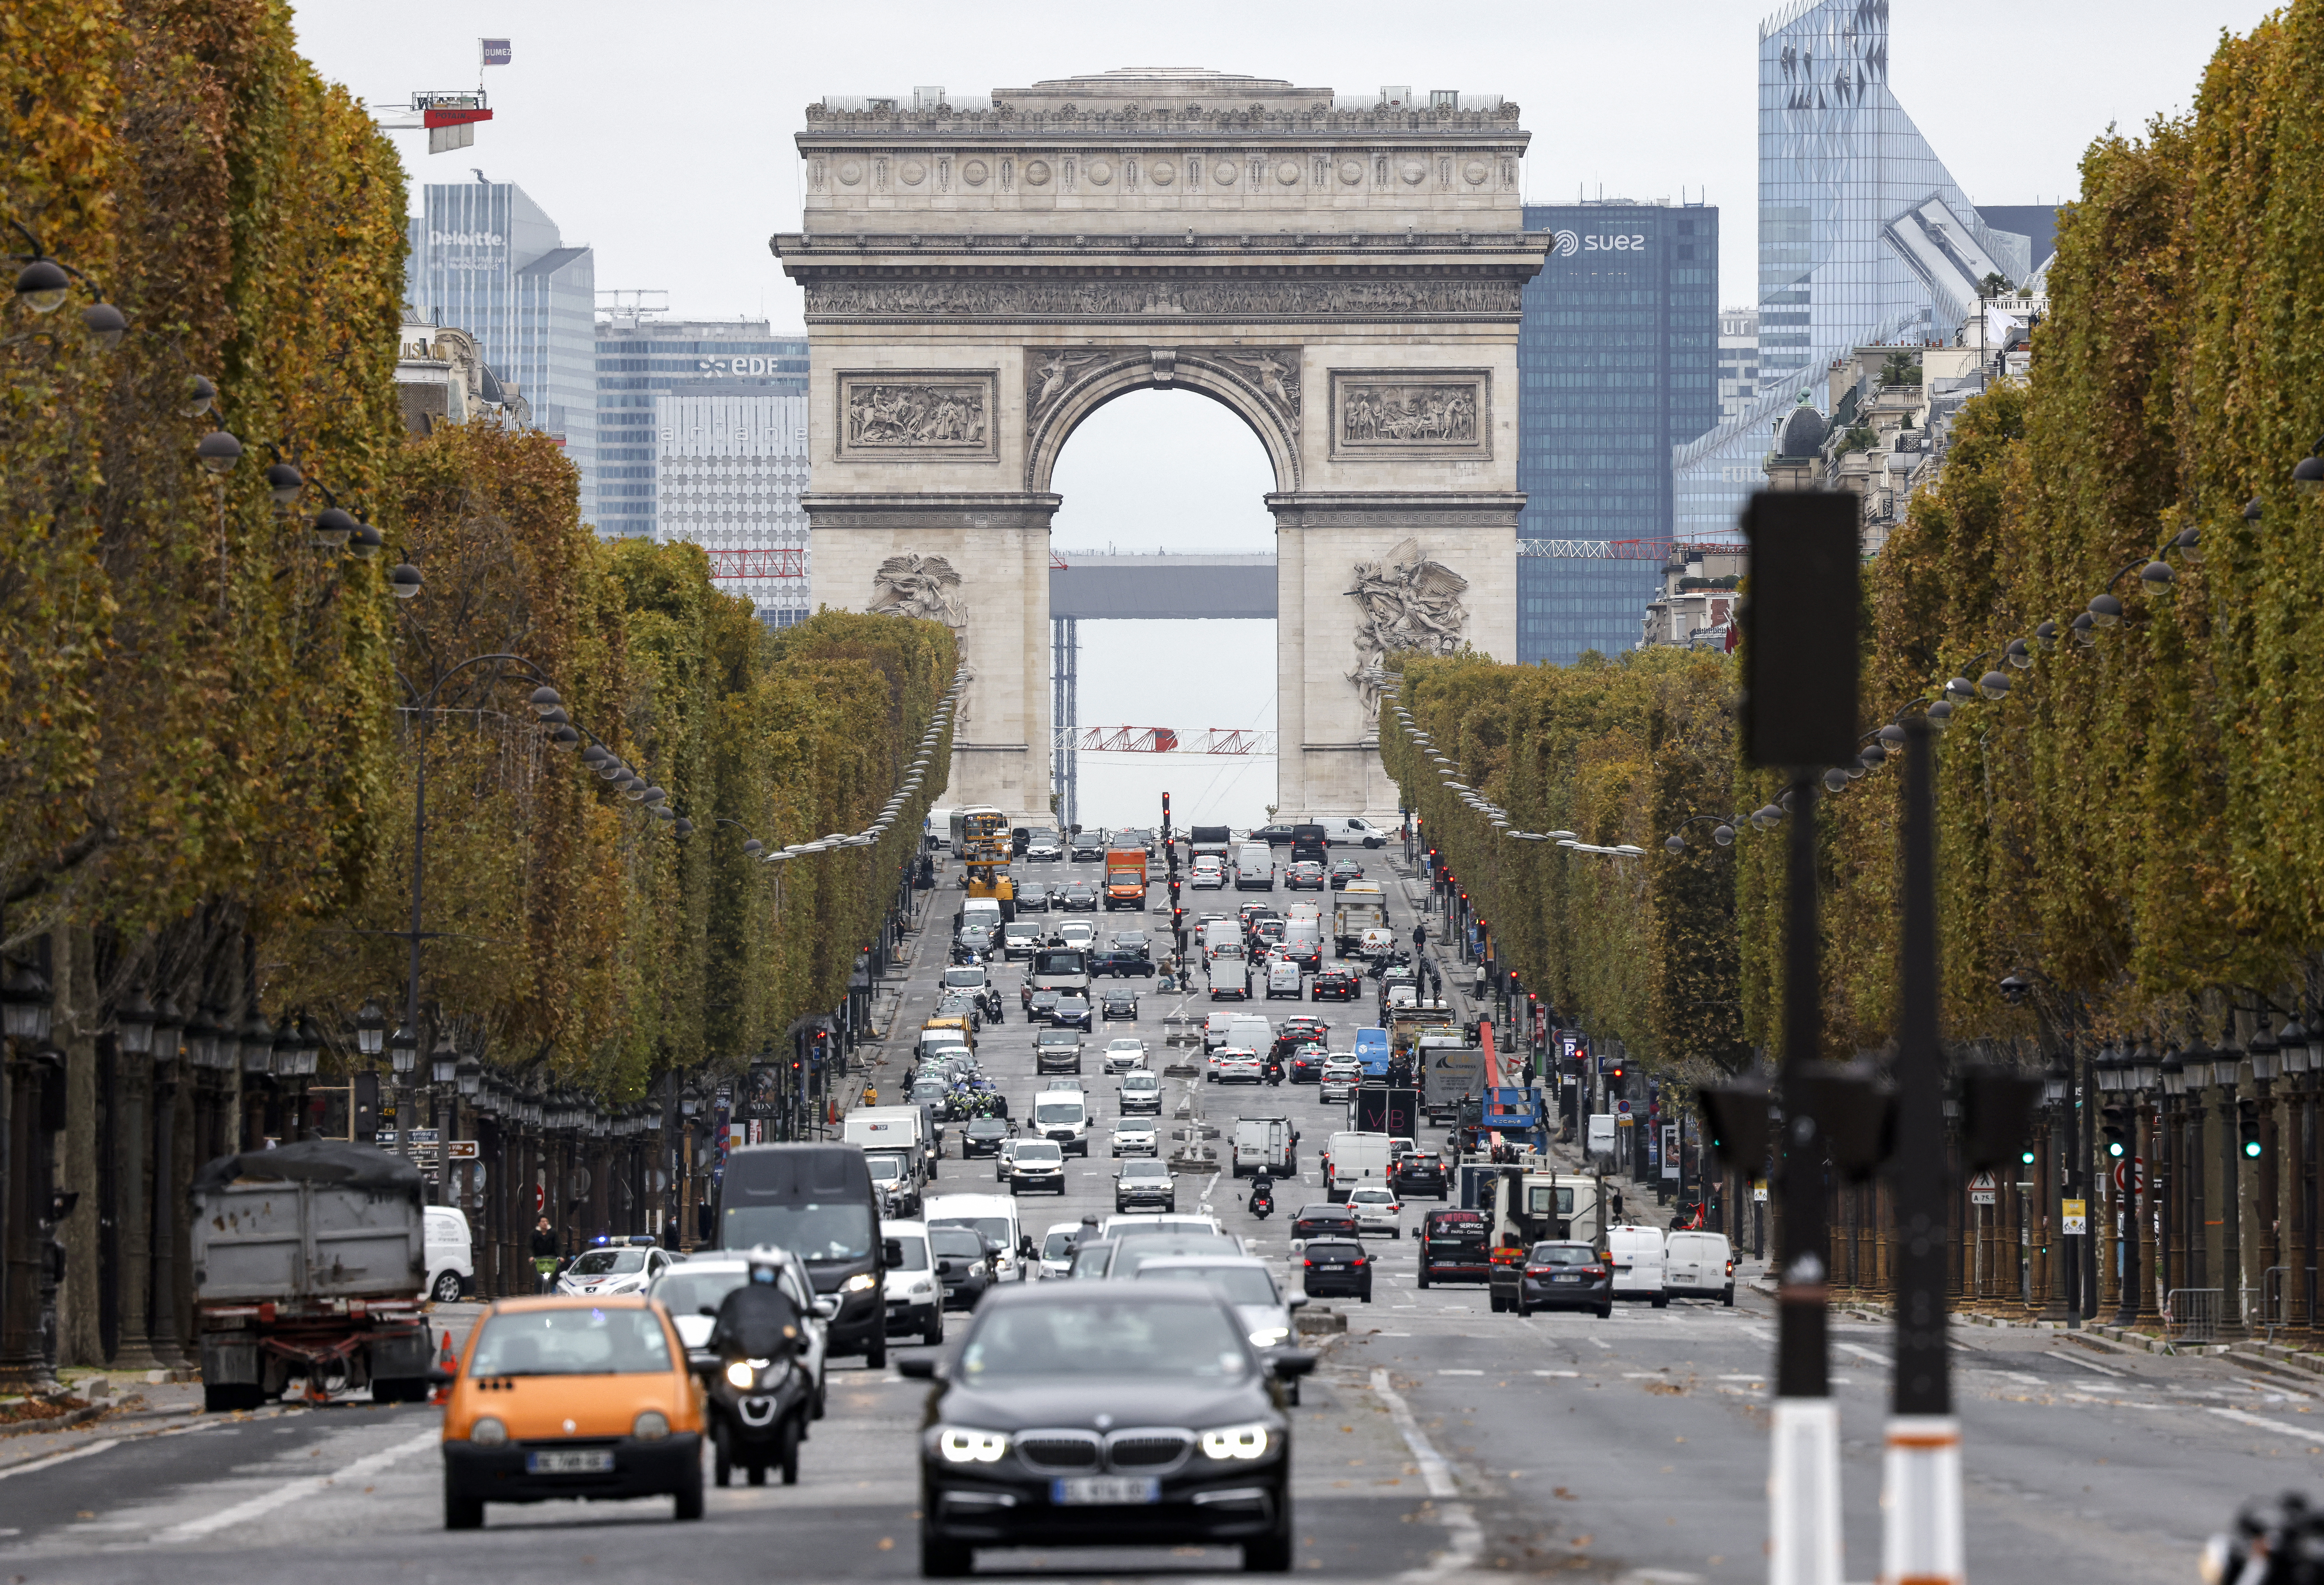 Paris slows down to 30 kph